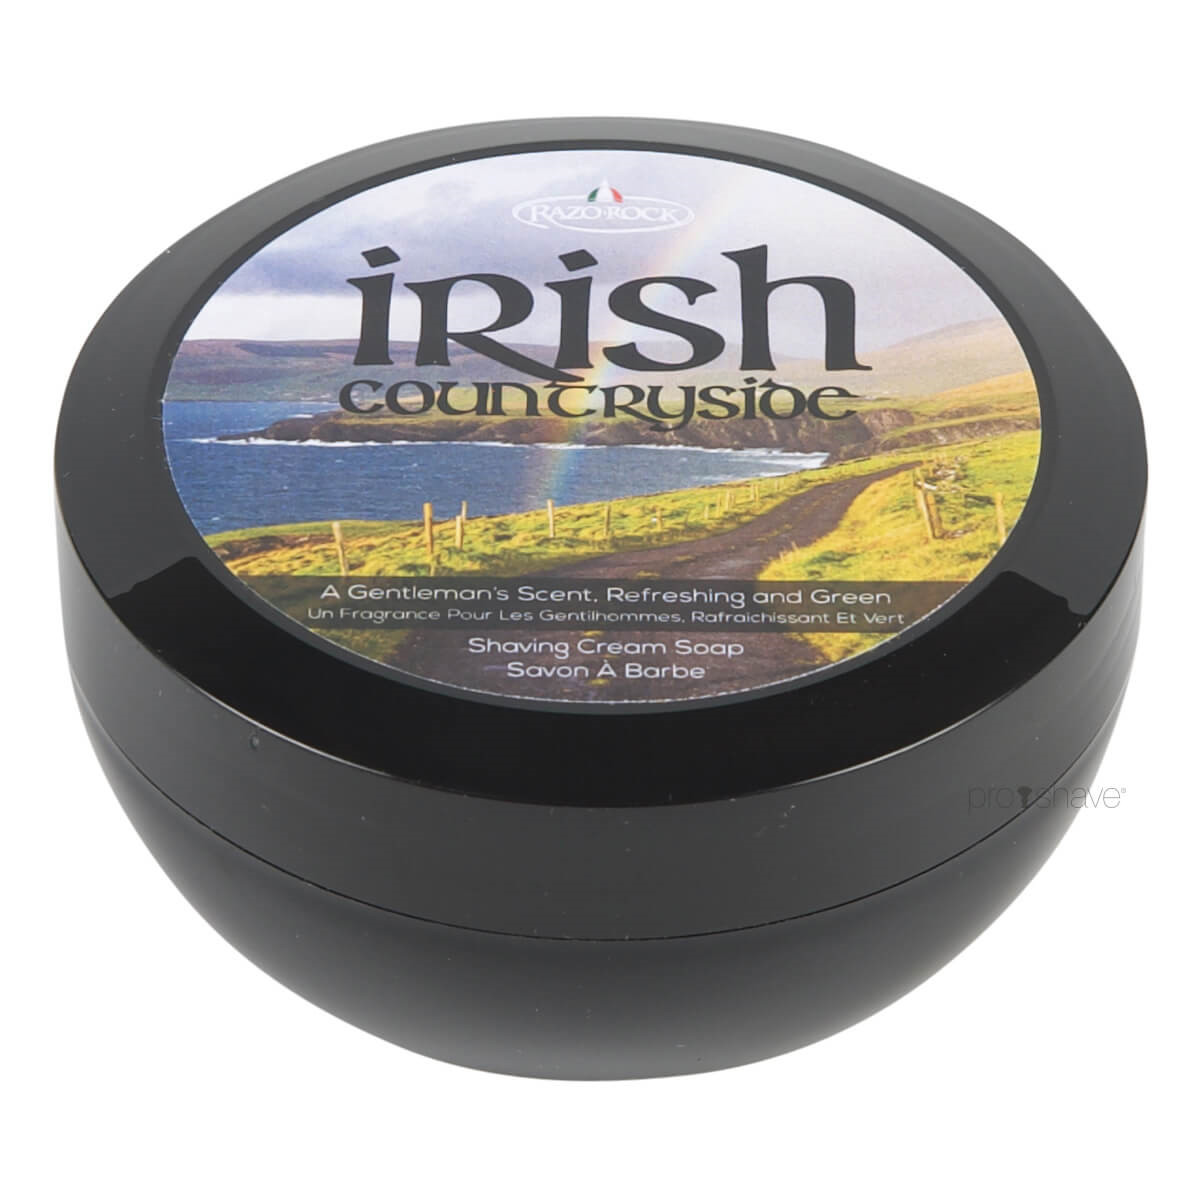 Billede af RazoRock Irish Countryside Barbersæbe, 150 ml.